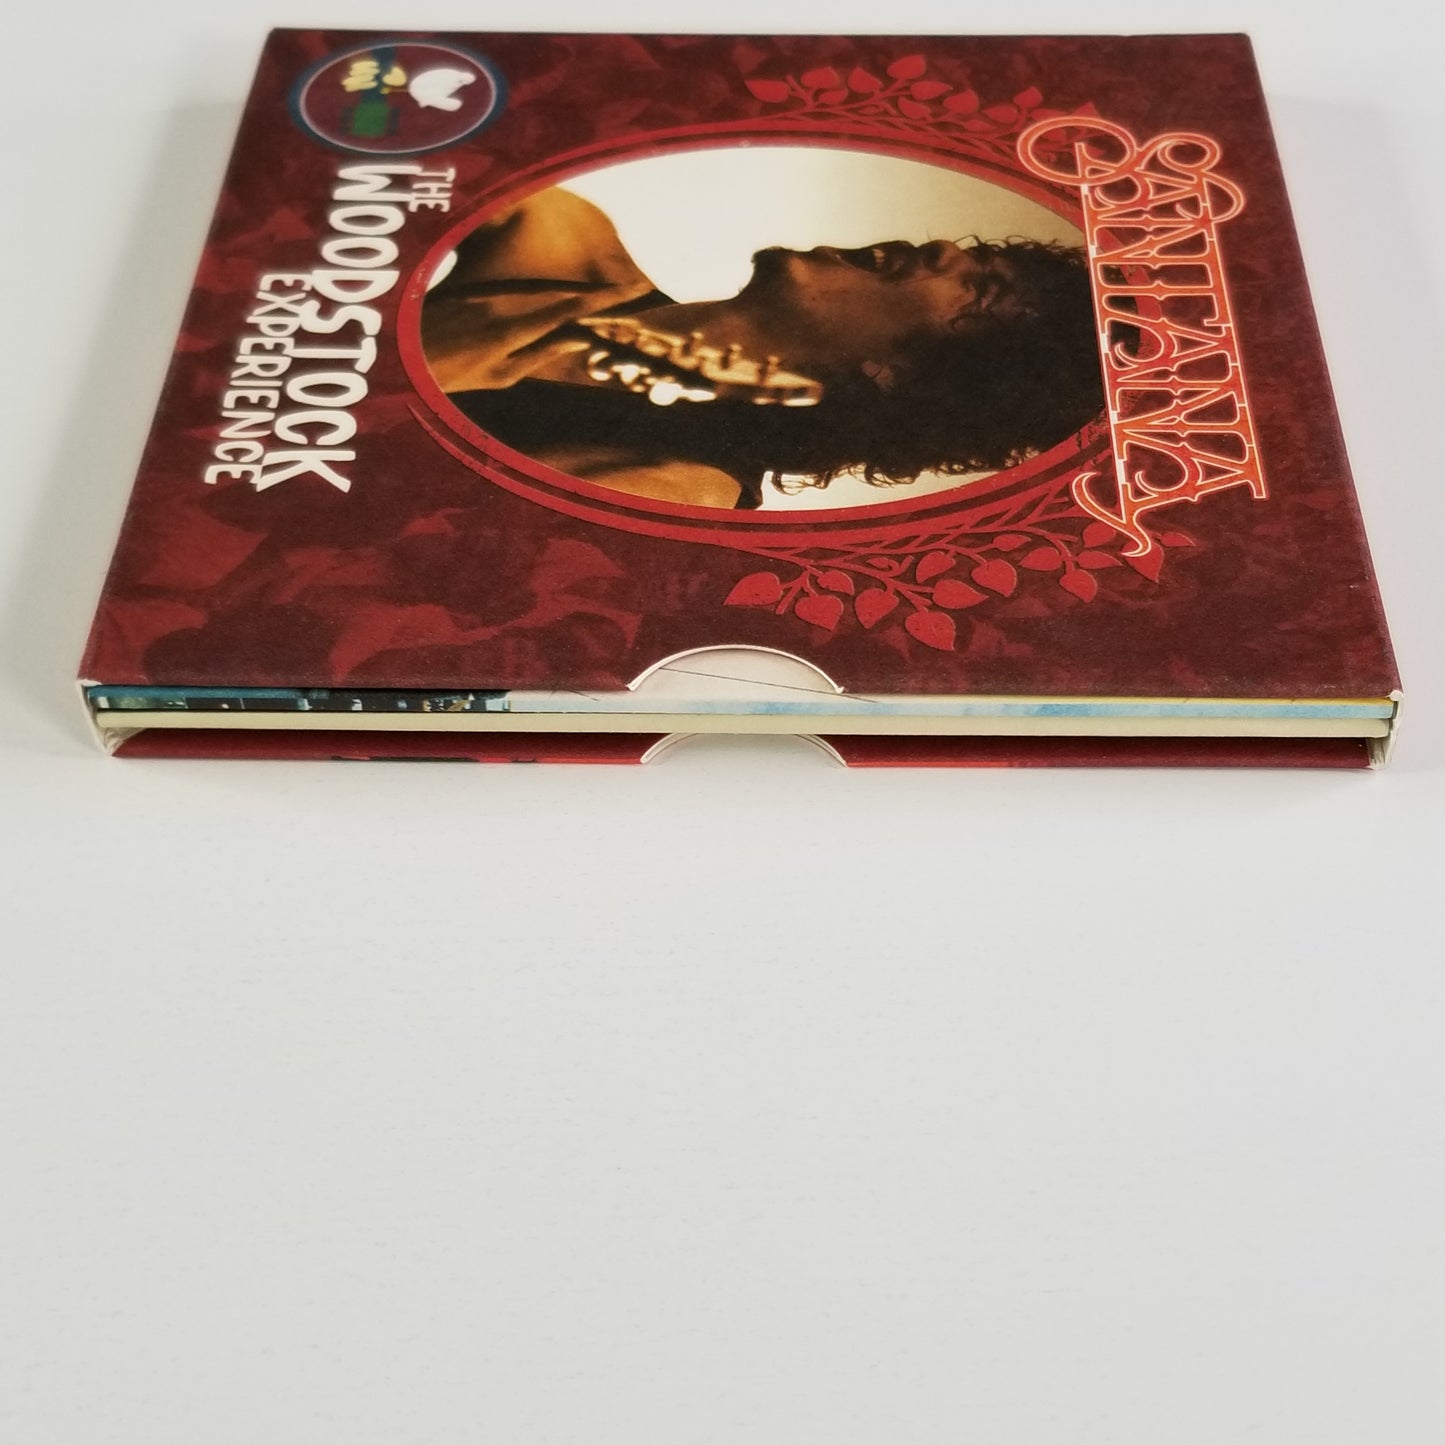 Santana – The Woodstock Experience (2009, 2x CD Set) 88697 48242 2